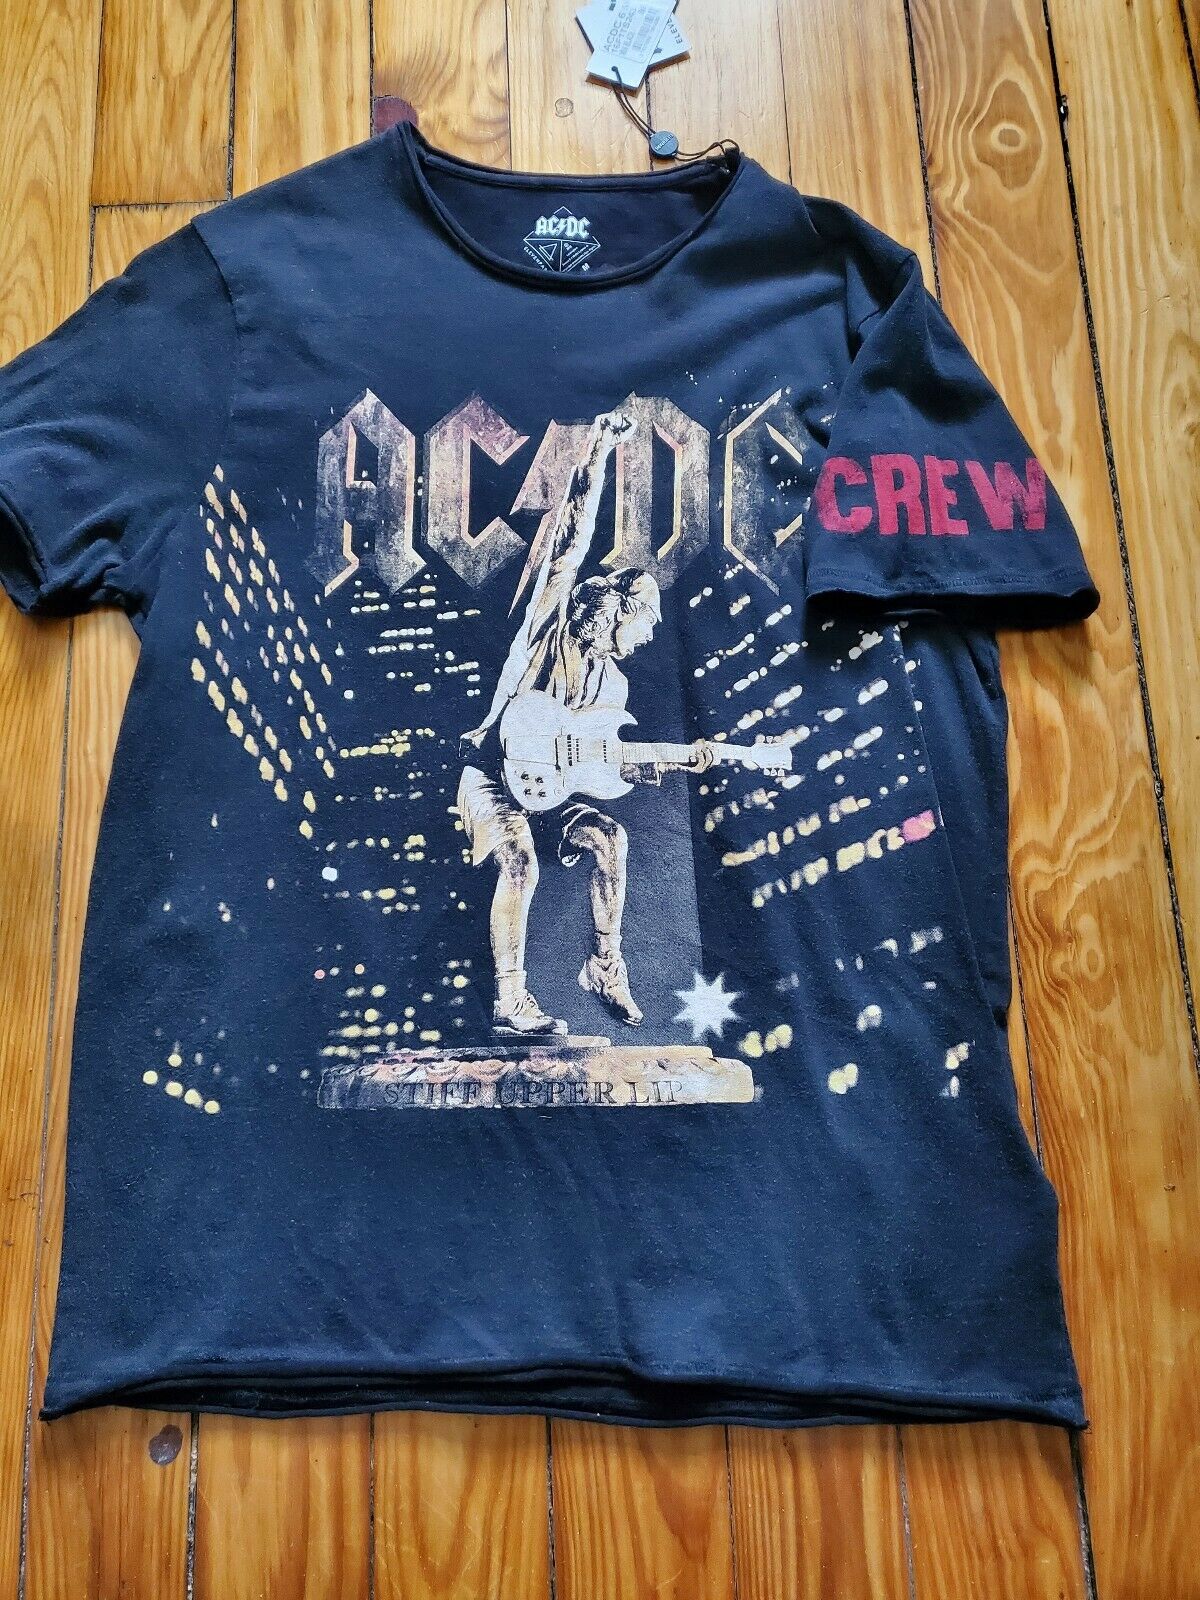 Acdc Size M T-shirt Stiff Upper Lip World' Tour Rare 2000/01 T Shirt Misprint